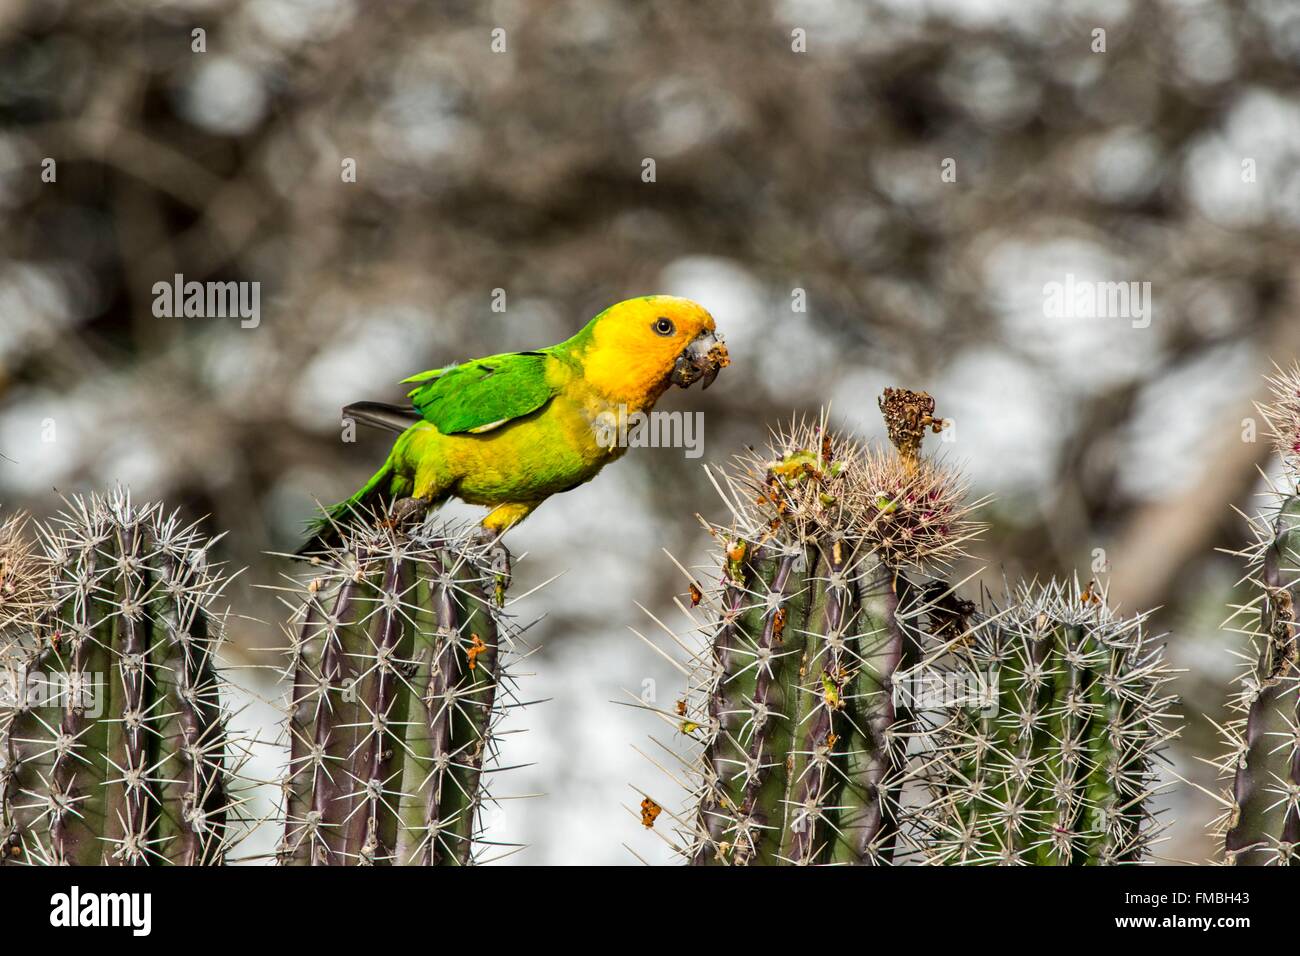 Dutch West Indies, Bonaire island, Brown-throated Parakeet (Eupsittula pertinax) on a hedge of cactus Stock Photo